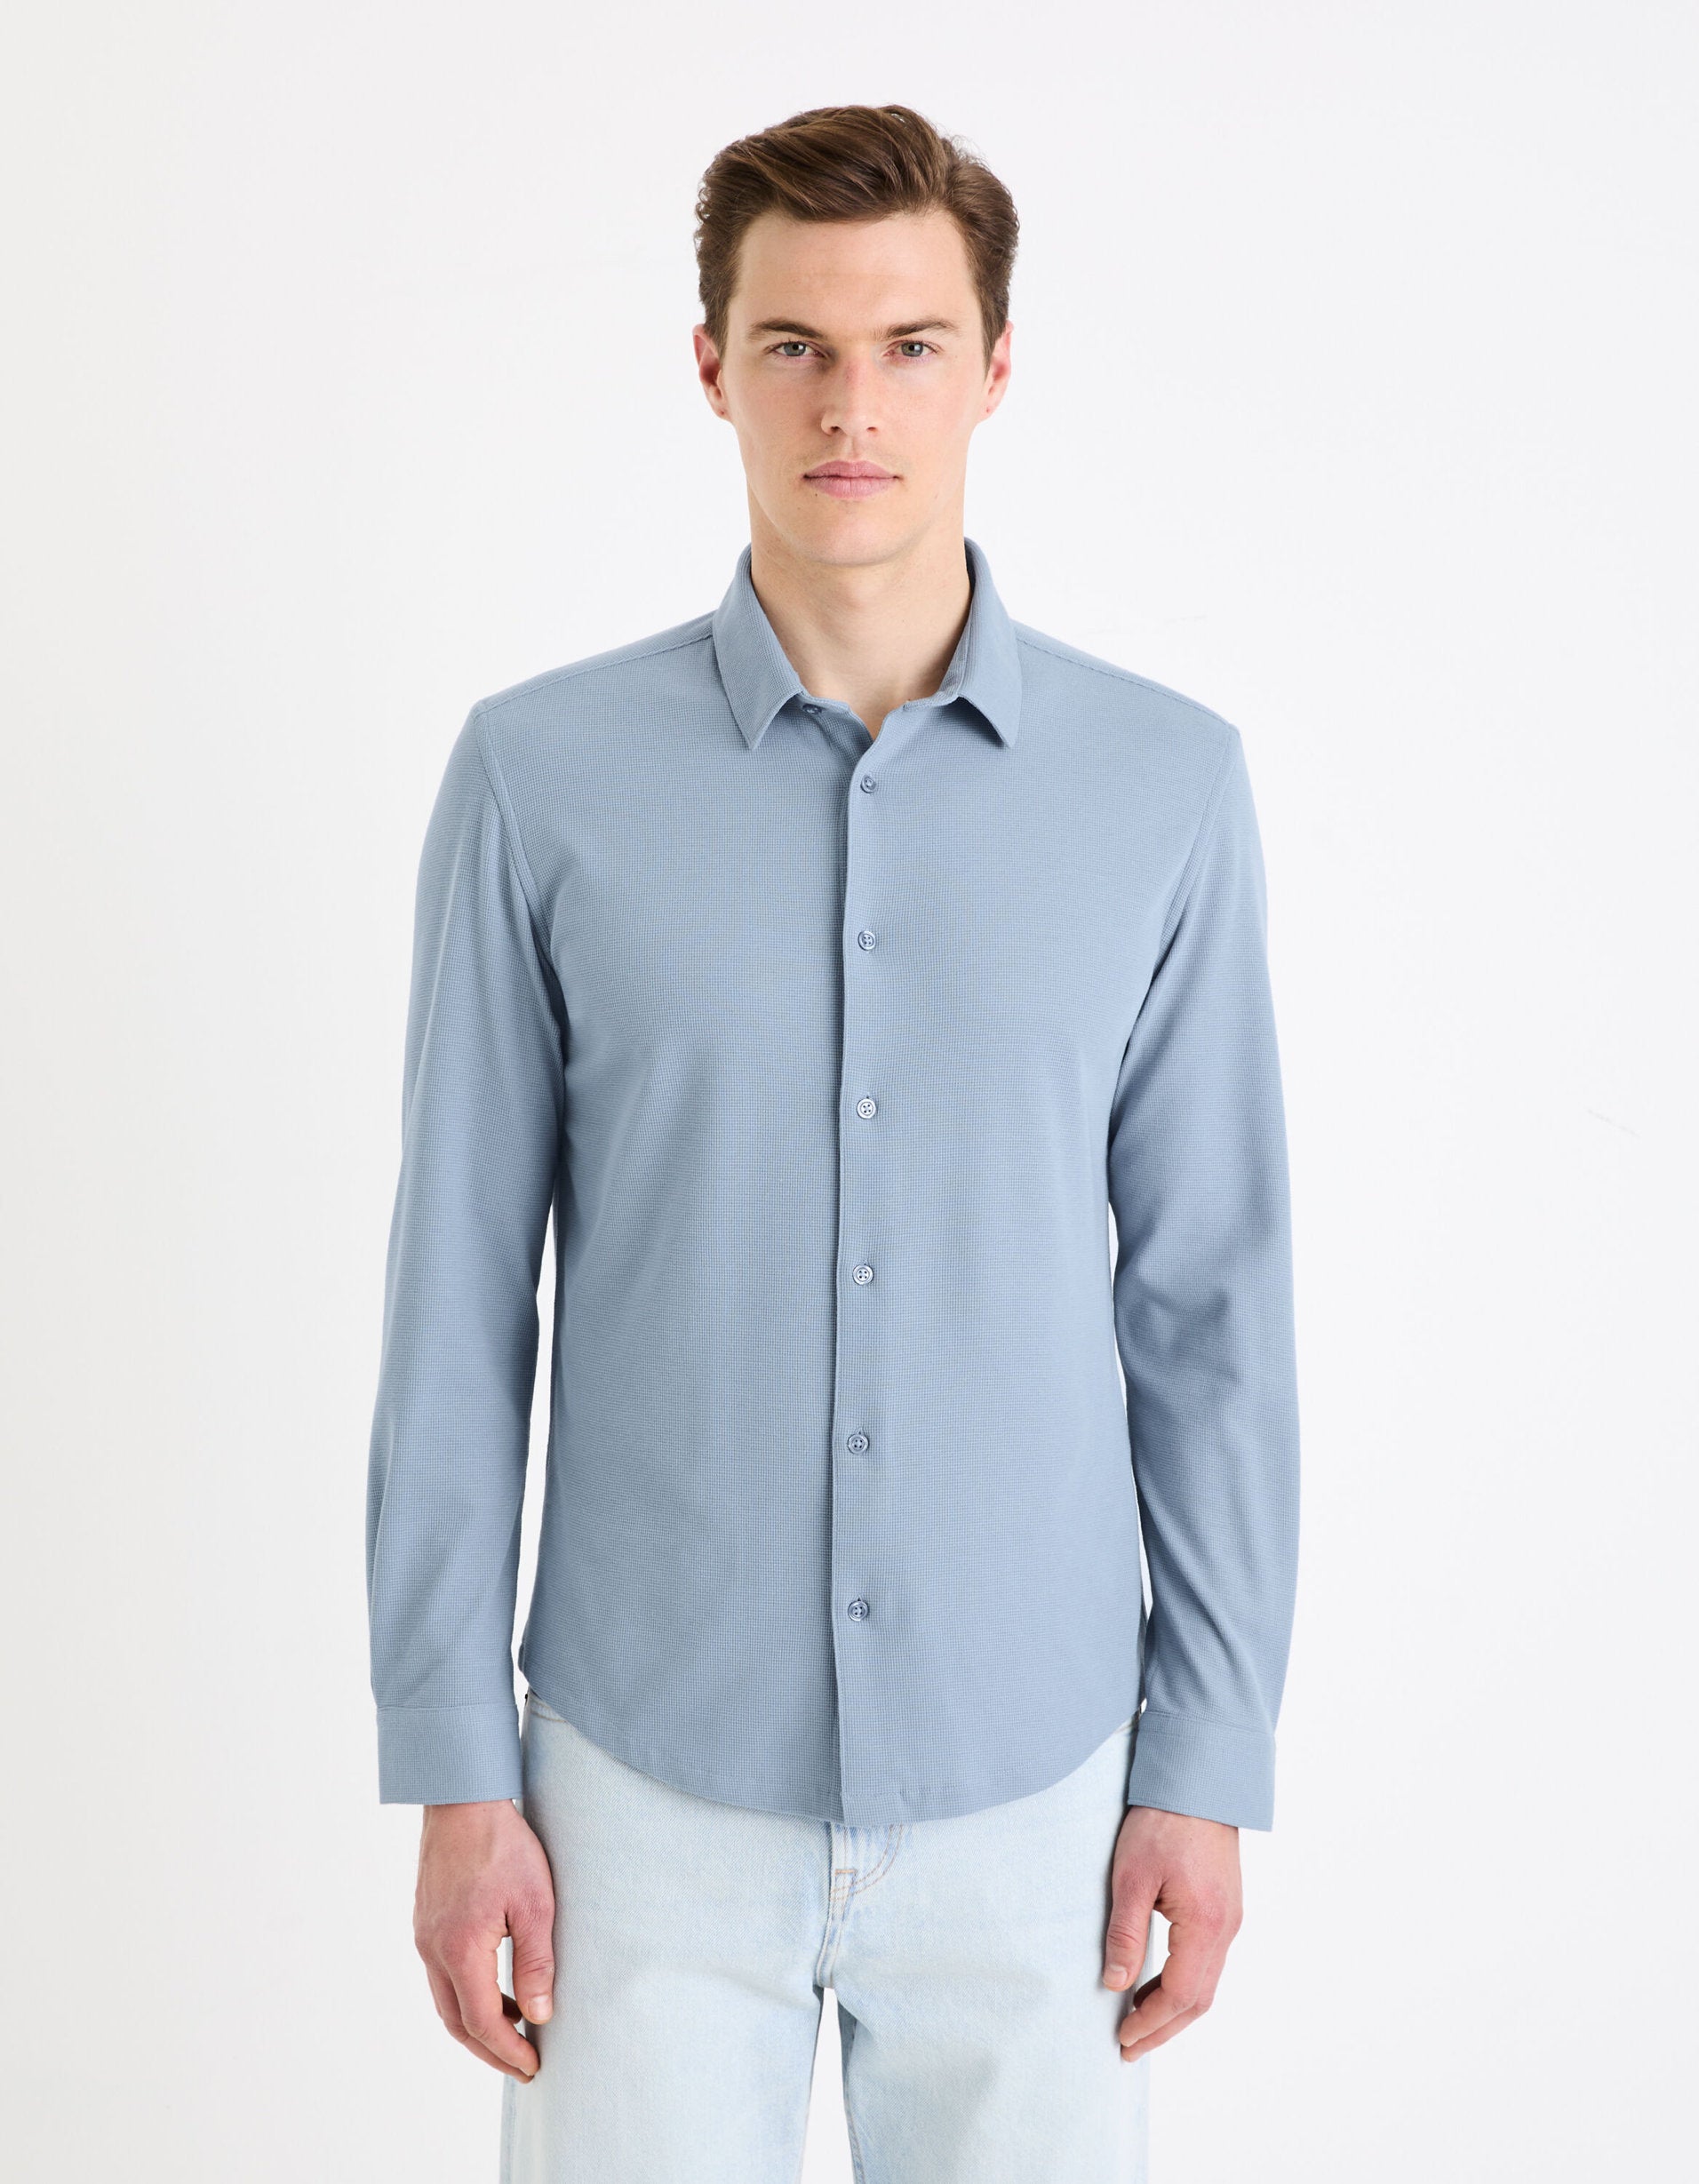 Regular Plain Embossed Shirt_GAWAFFLE_LIGHT BLUE_03